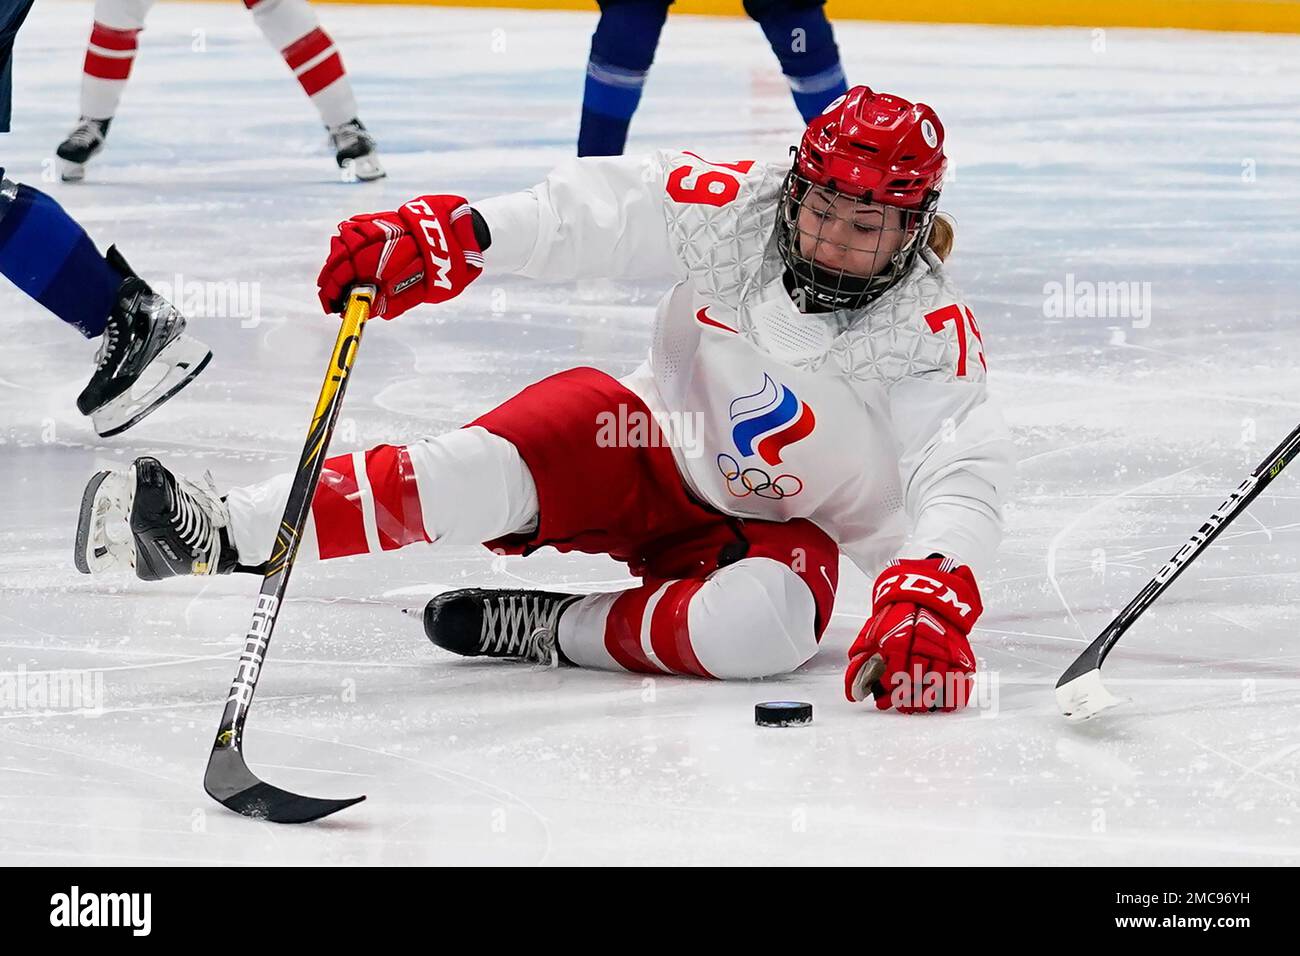 Finland unveils ice hockey jerseys for Beijing 2022